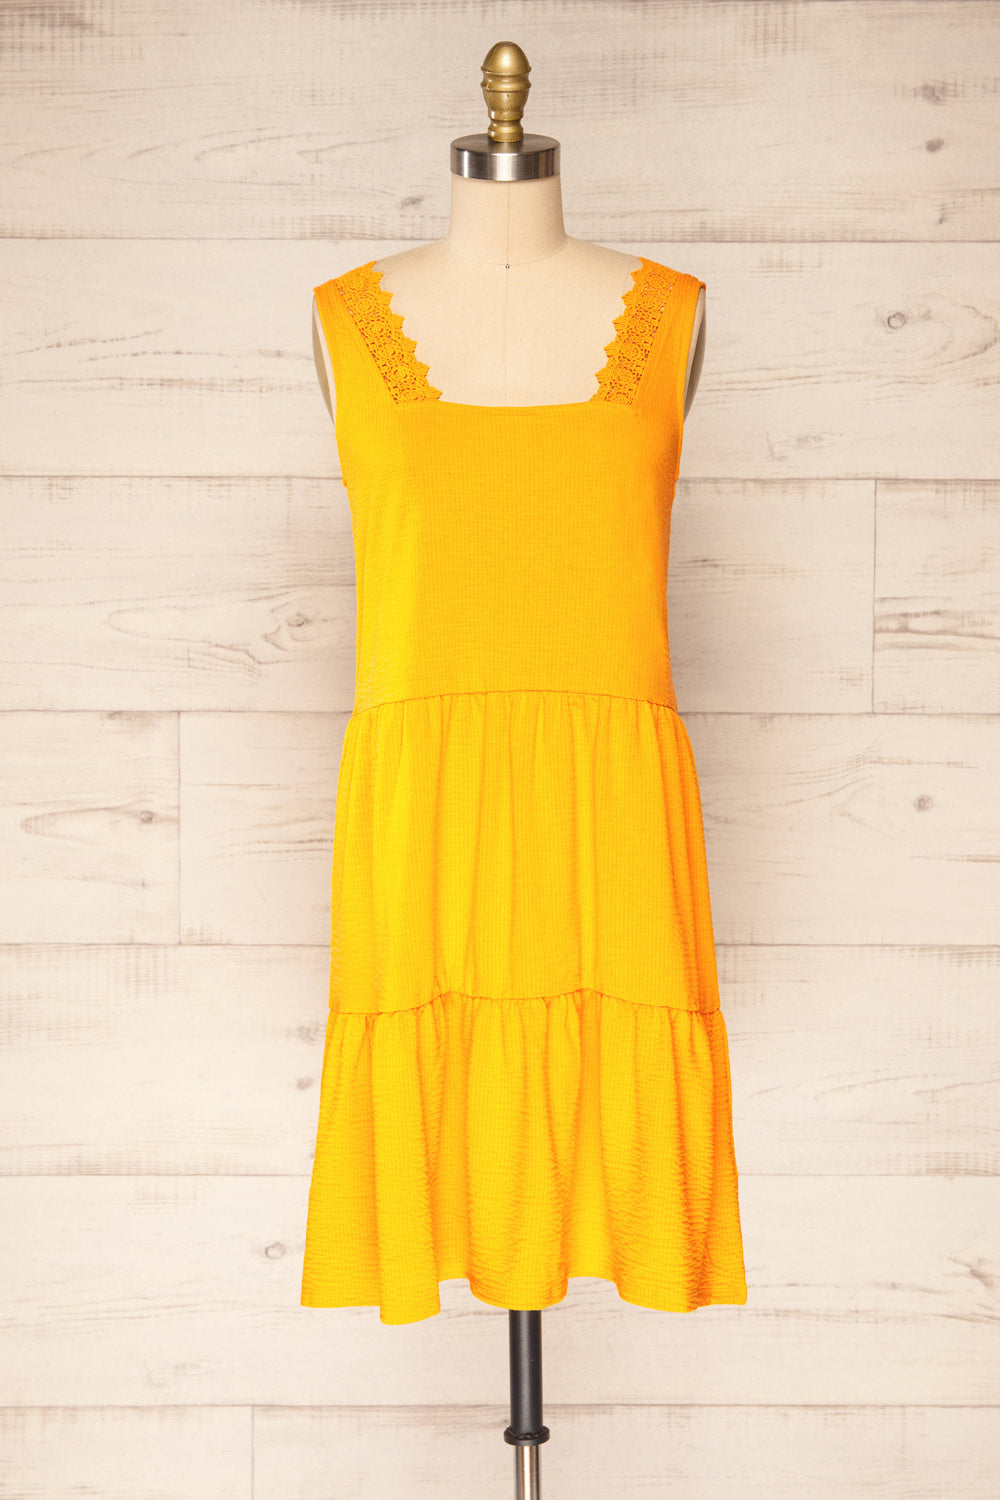 Preddu Yellow Lace Collar Short Tiered Dress | La petite garçonne front view